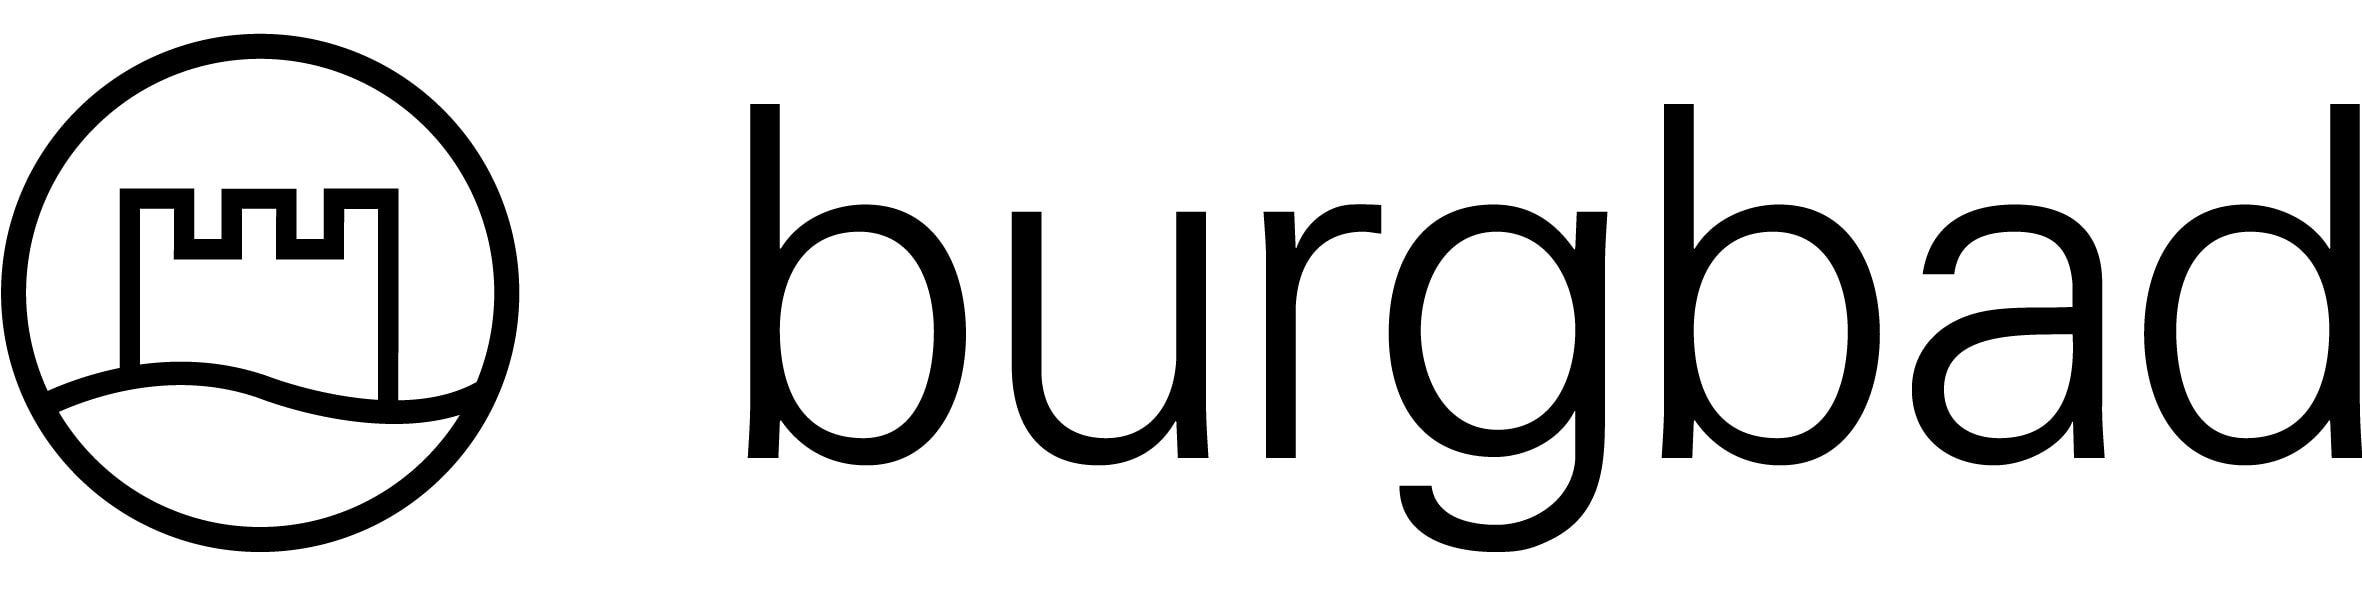 Burgbad Logo